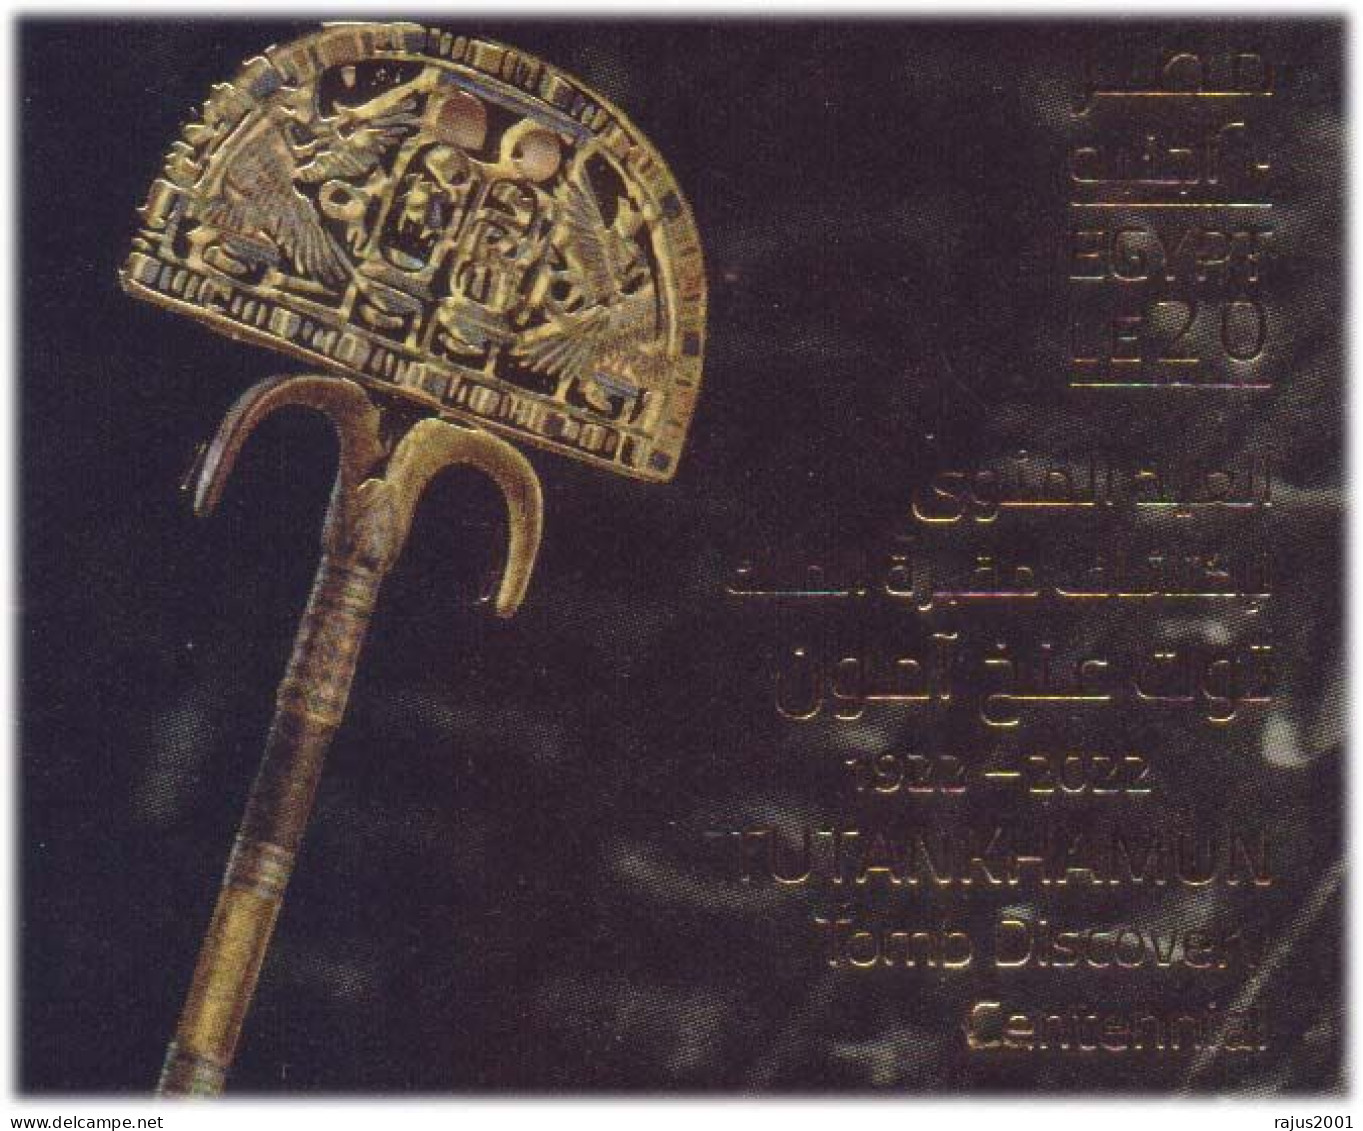 King Tutankhamun Tomb Discovery, Tutankhamun, Tutankhamen, Pharaoh, Egyptology, History, GOLD PRINT UNUSUAL 4x Post Card - Aegyptologie